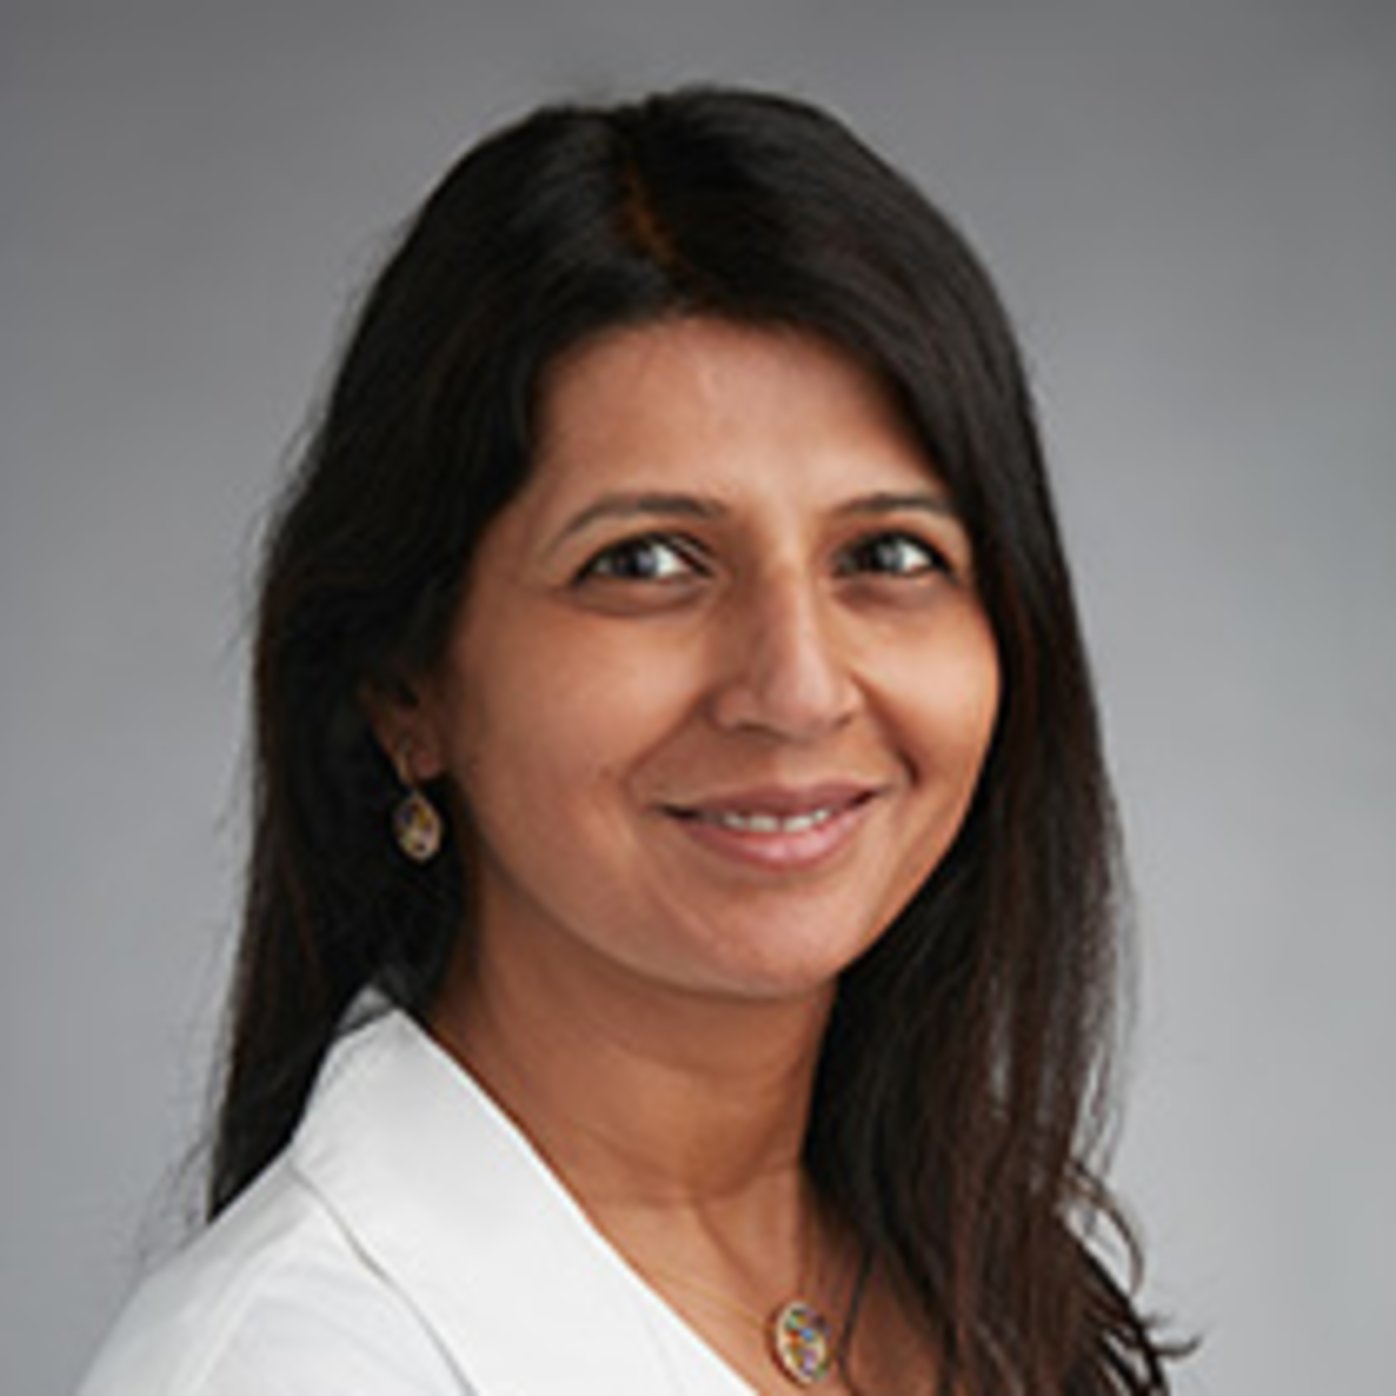 Dr. Puja Chitkara